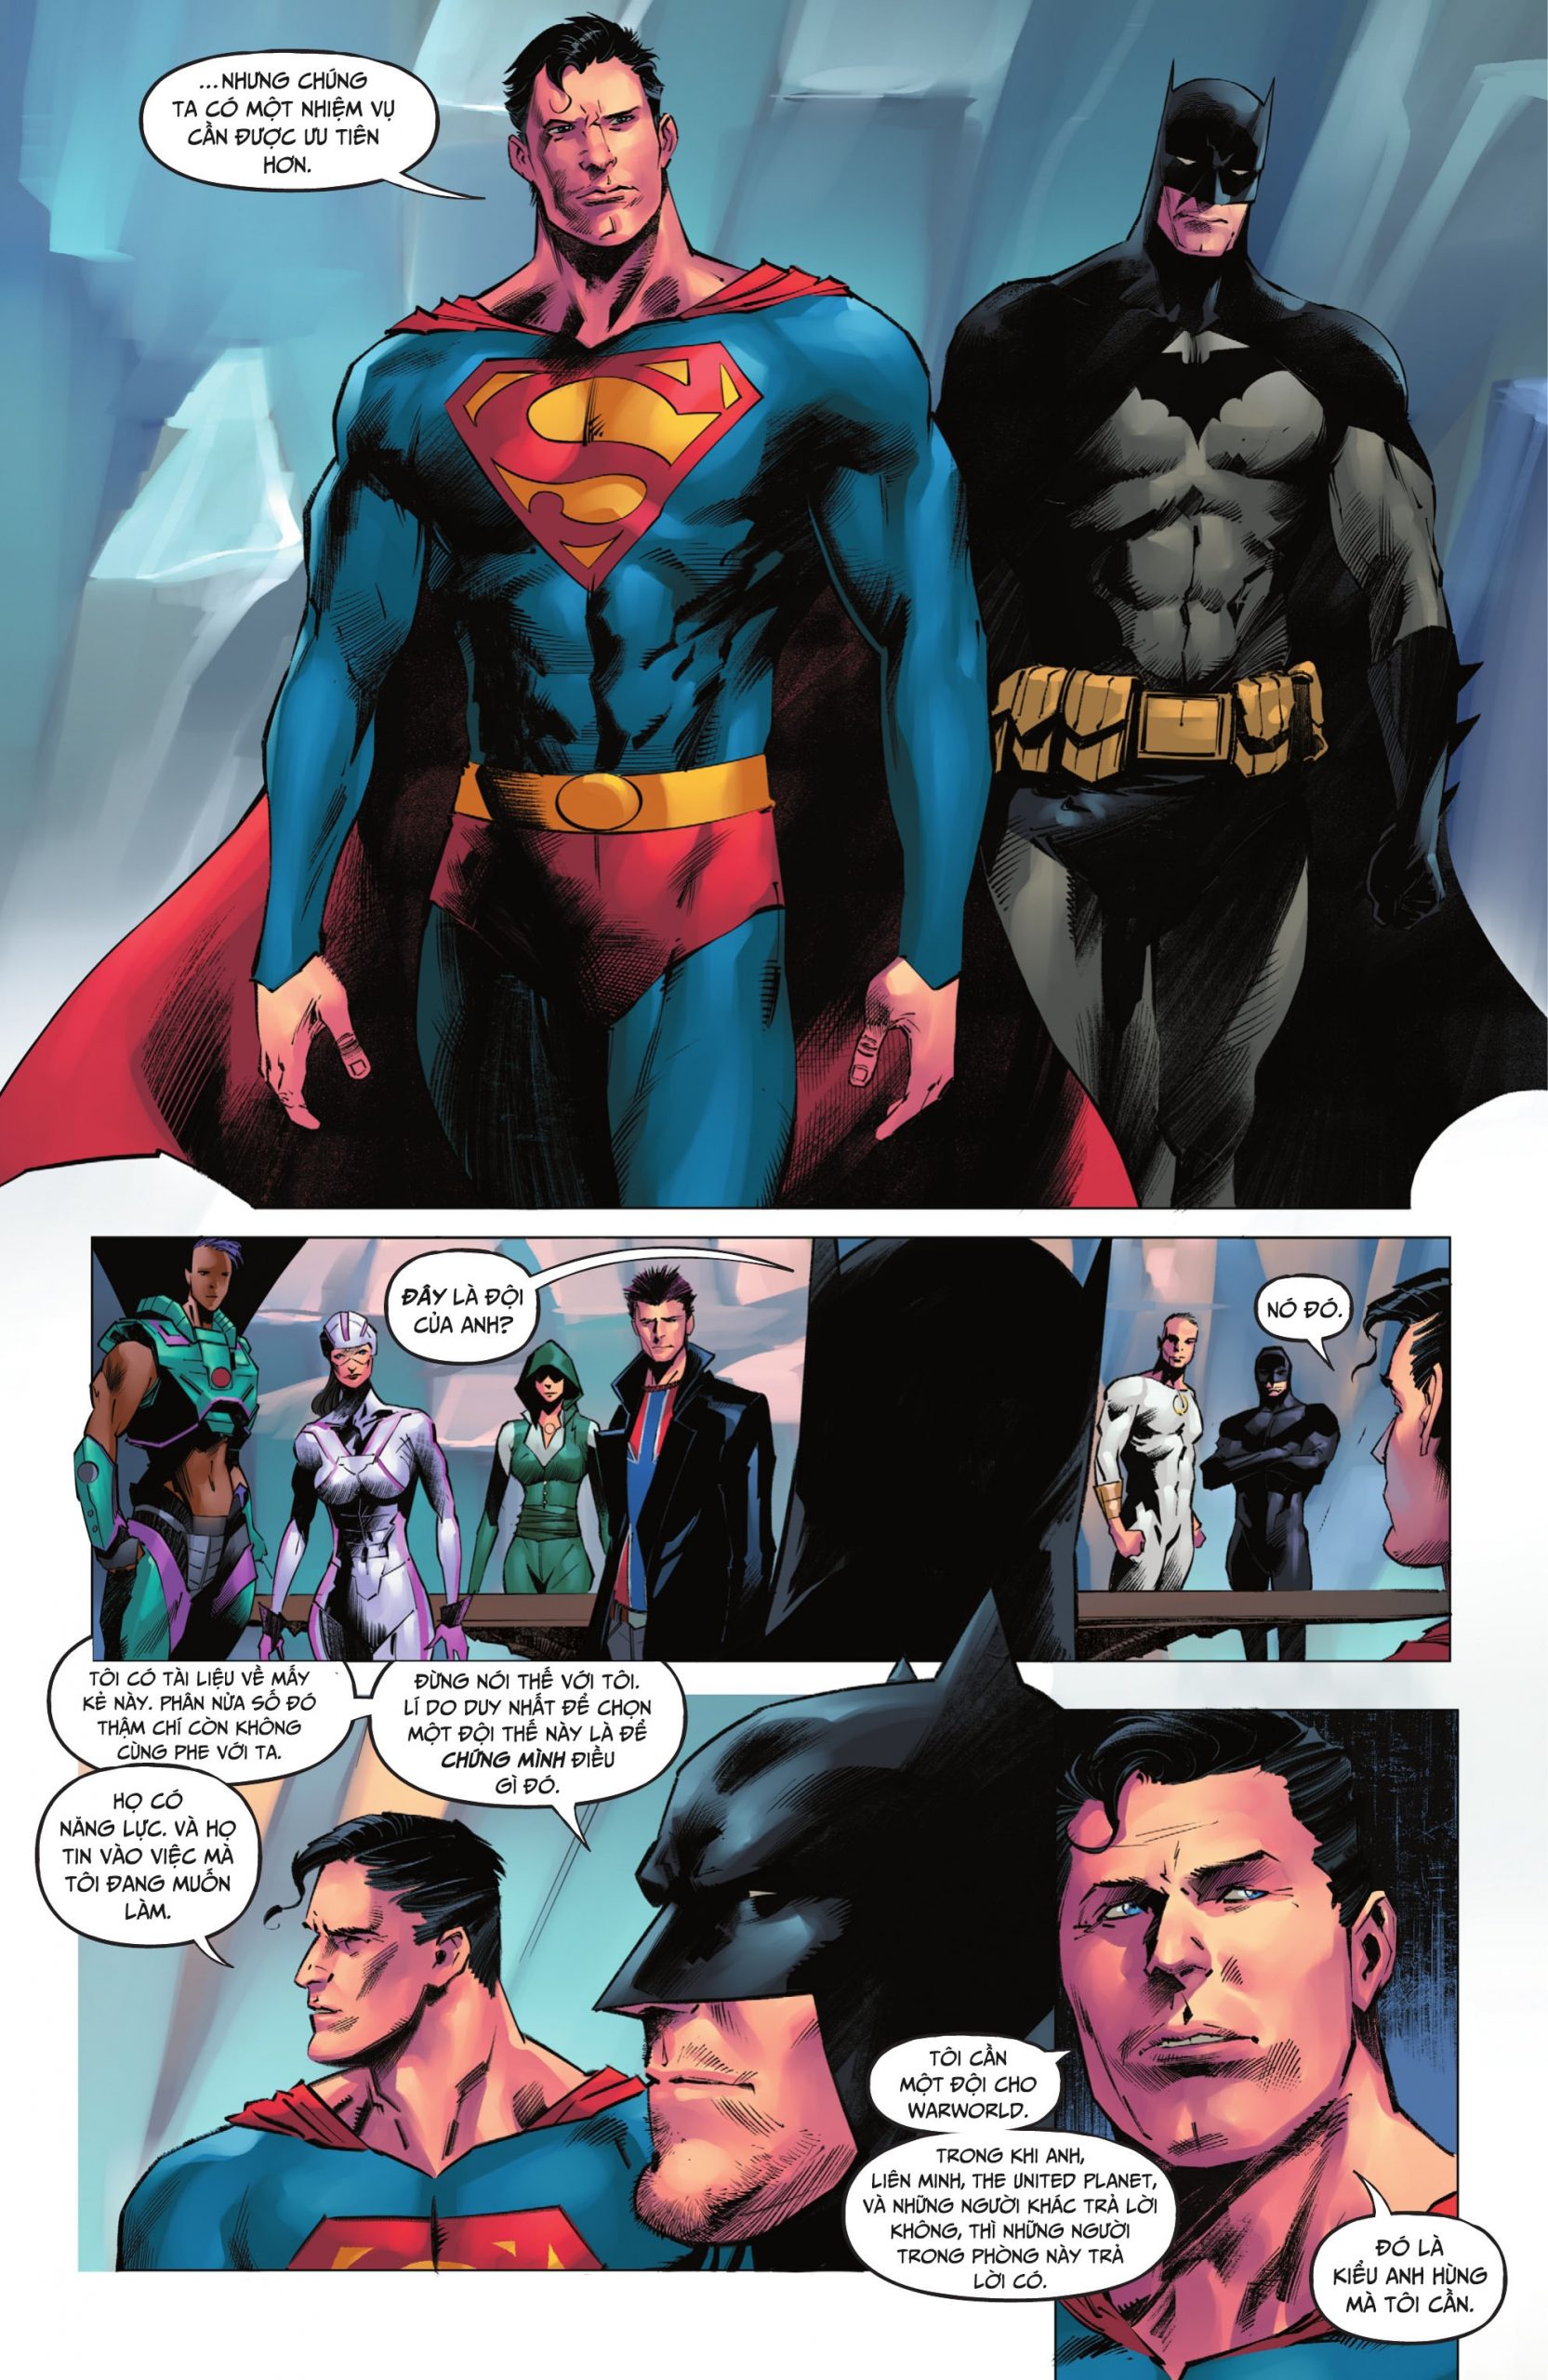 https://langgeek.net/wp-content/webpc-passthru.php?src=https://langgeek.net/wp-content/uploads/2021/11/Batman-Superman-2019-2021-Authority-Special-001-008-scaled.jpg&nocache=1